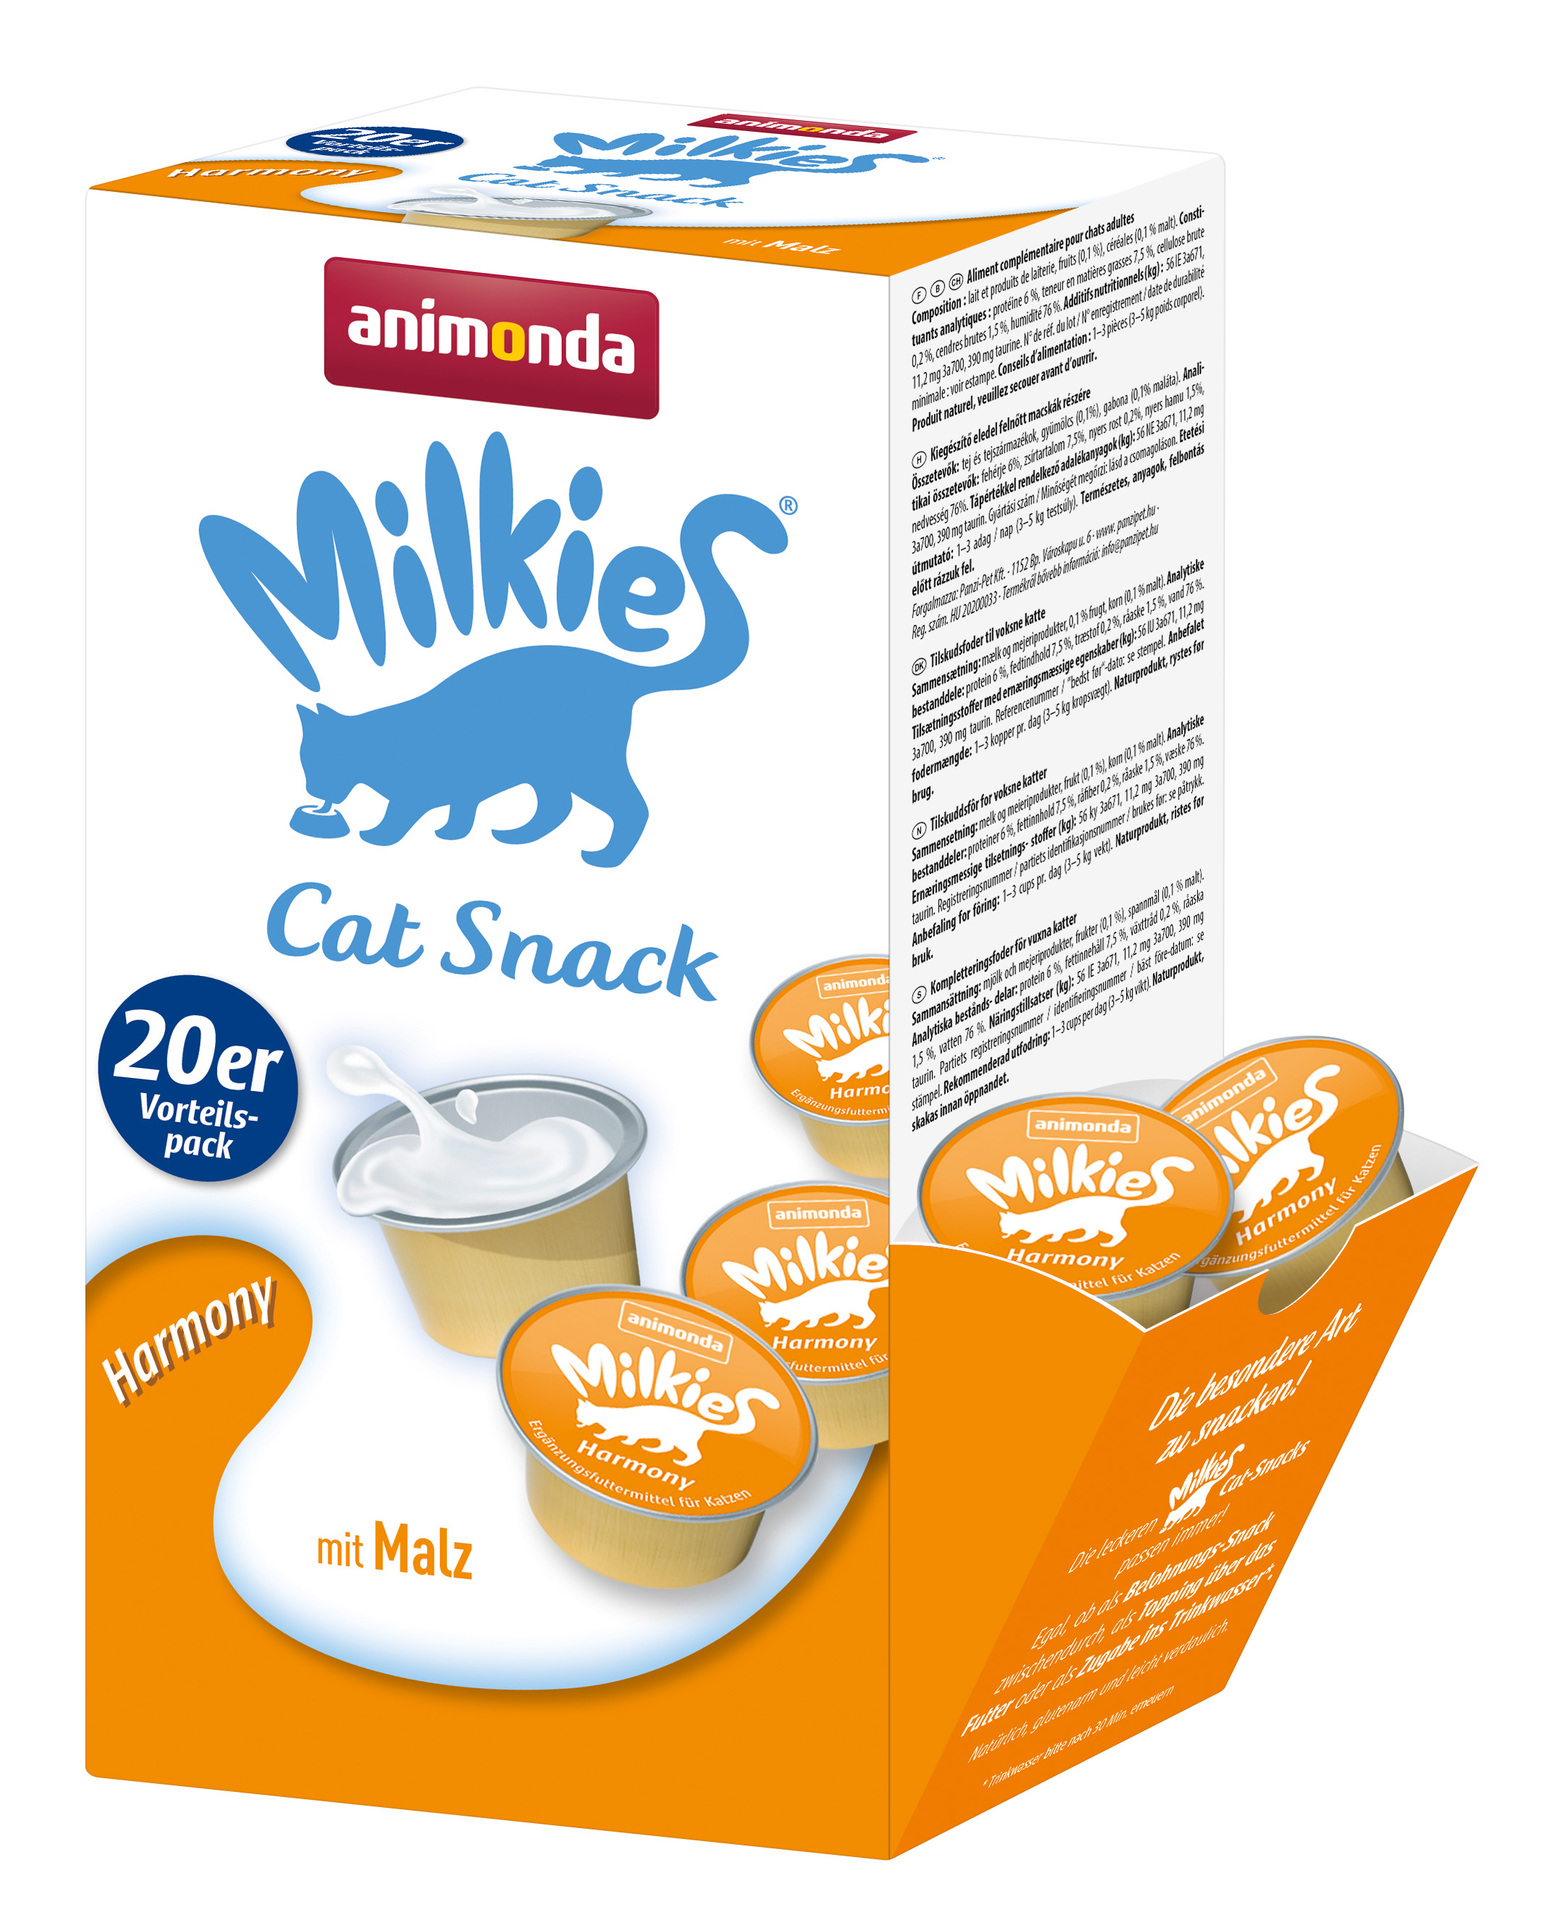 animonda petcare gmbh Cat Snack Milkies 20 x 15 g Cup